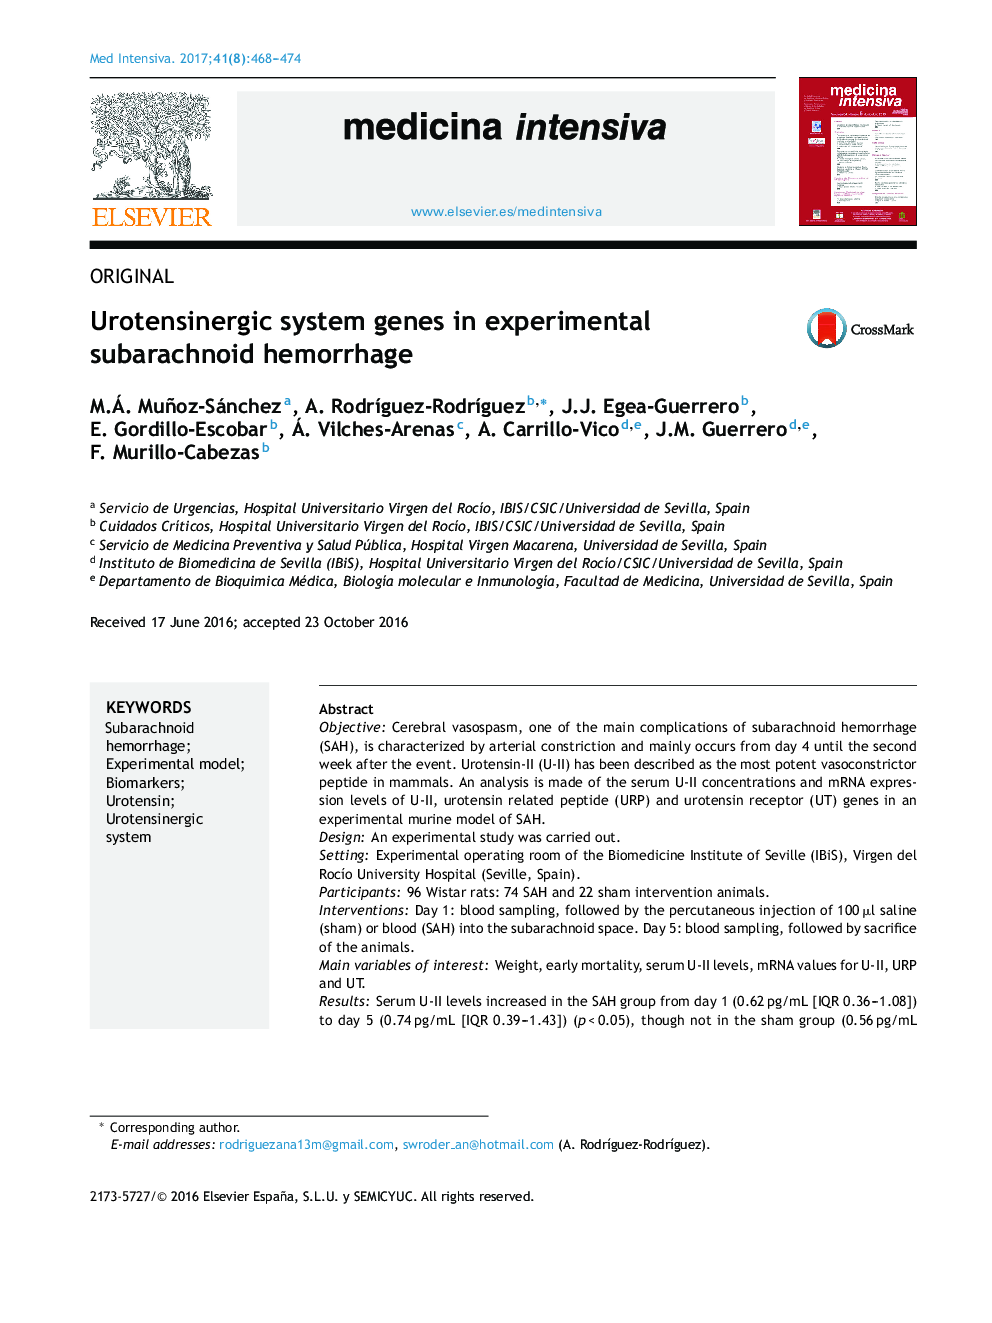 Urotensinergic system genes in experimental subarachnoid hemorrhage